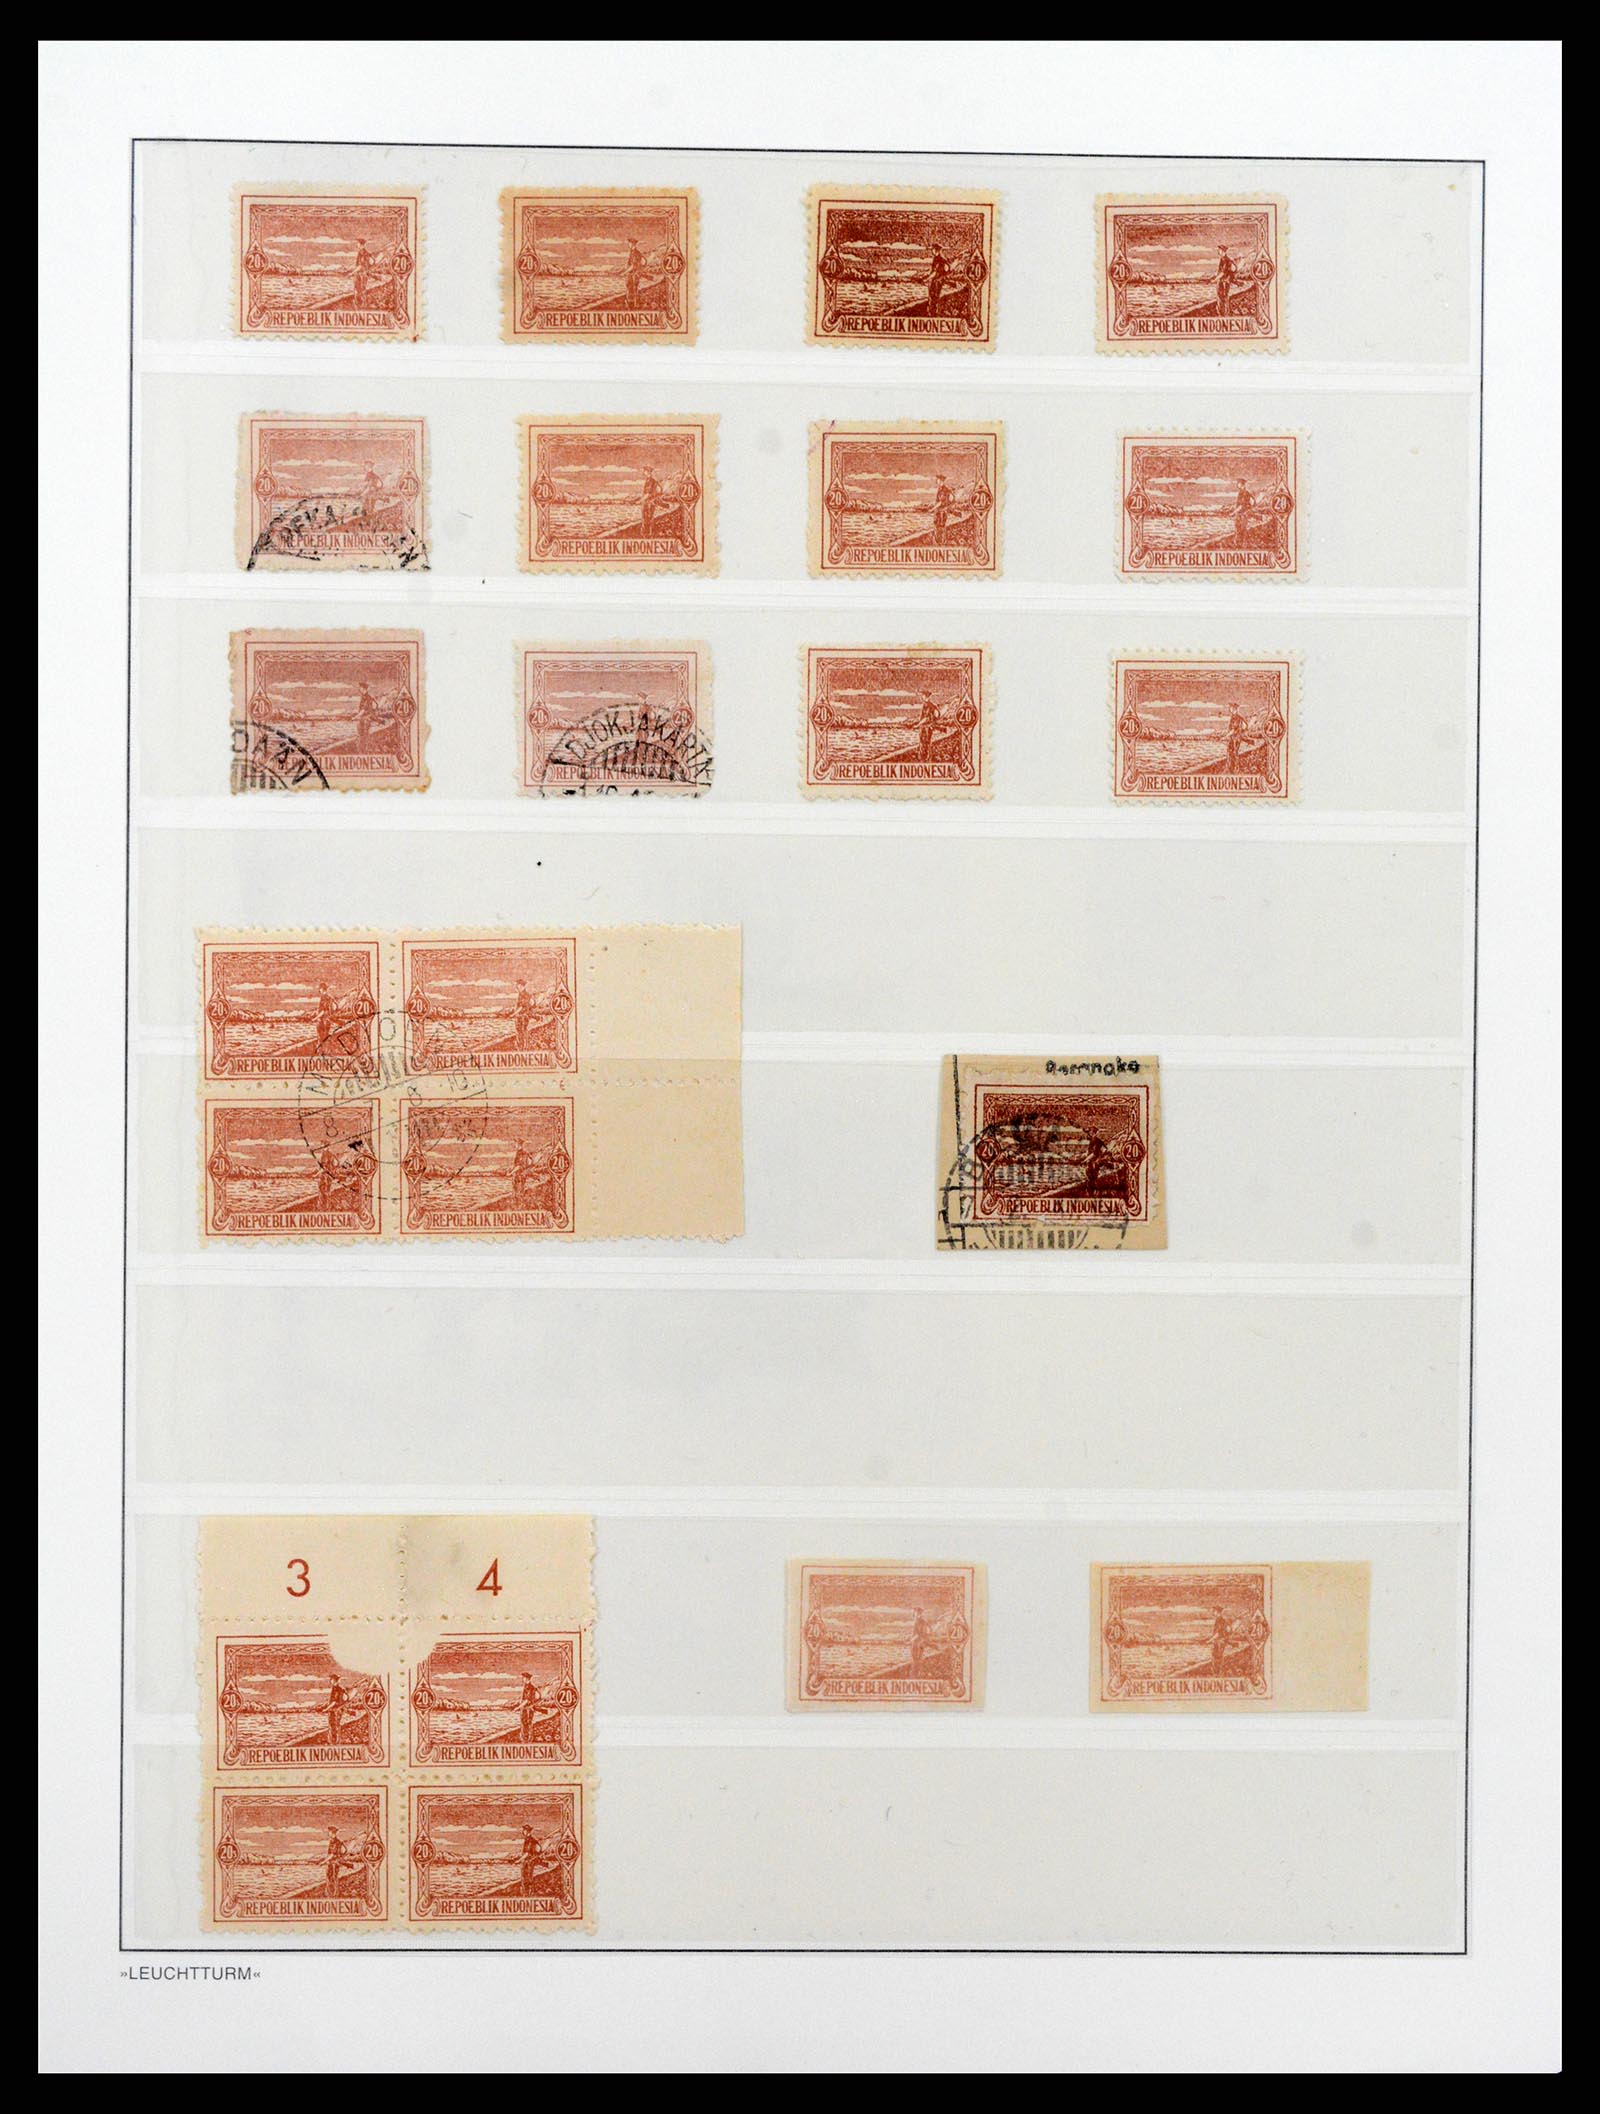 37435 012 - Stamp collection 37435 Indonesia interim period 1945-1948.